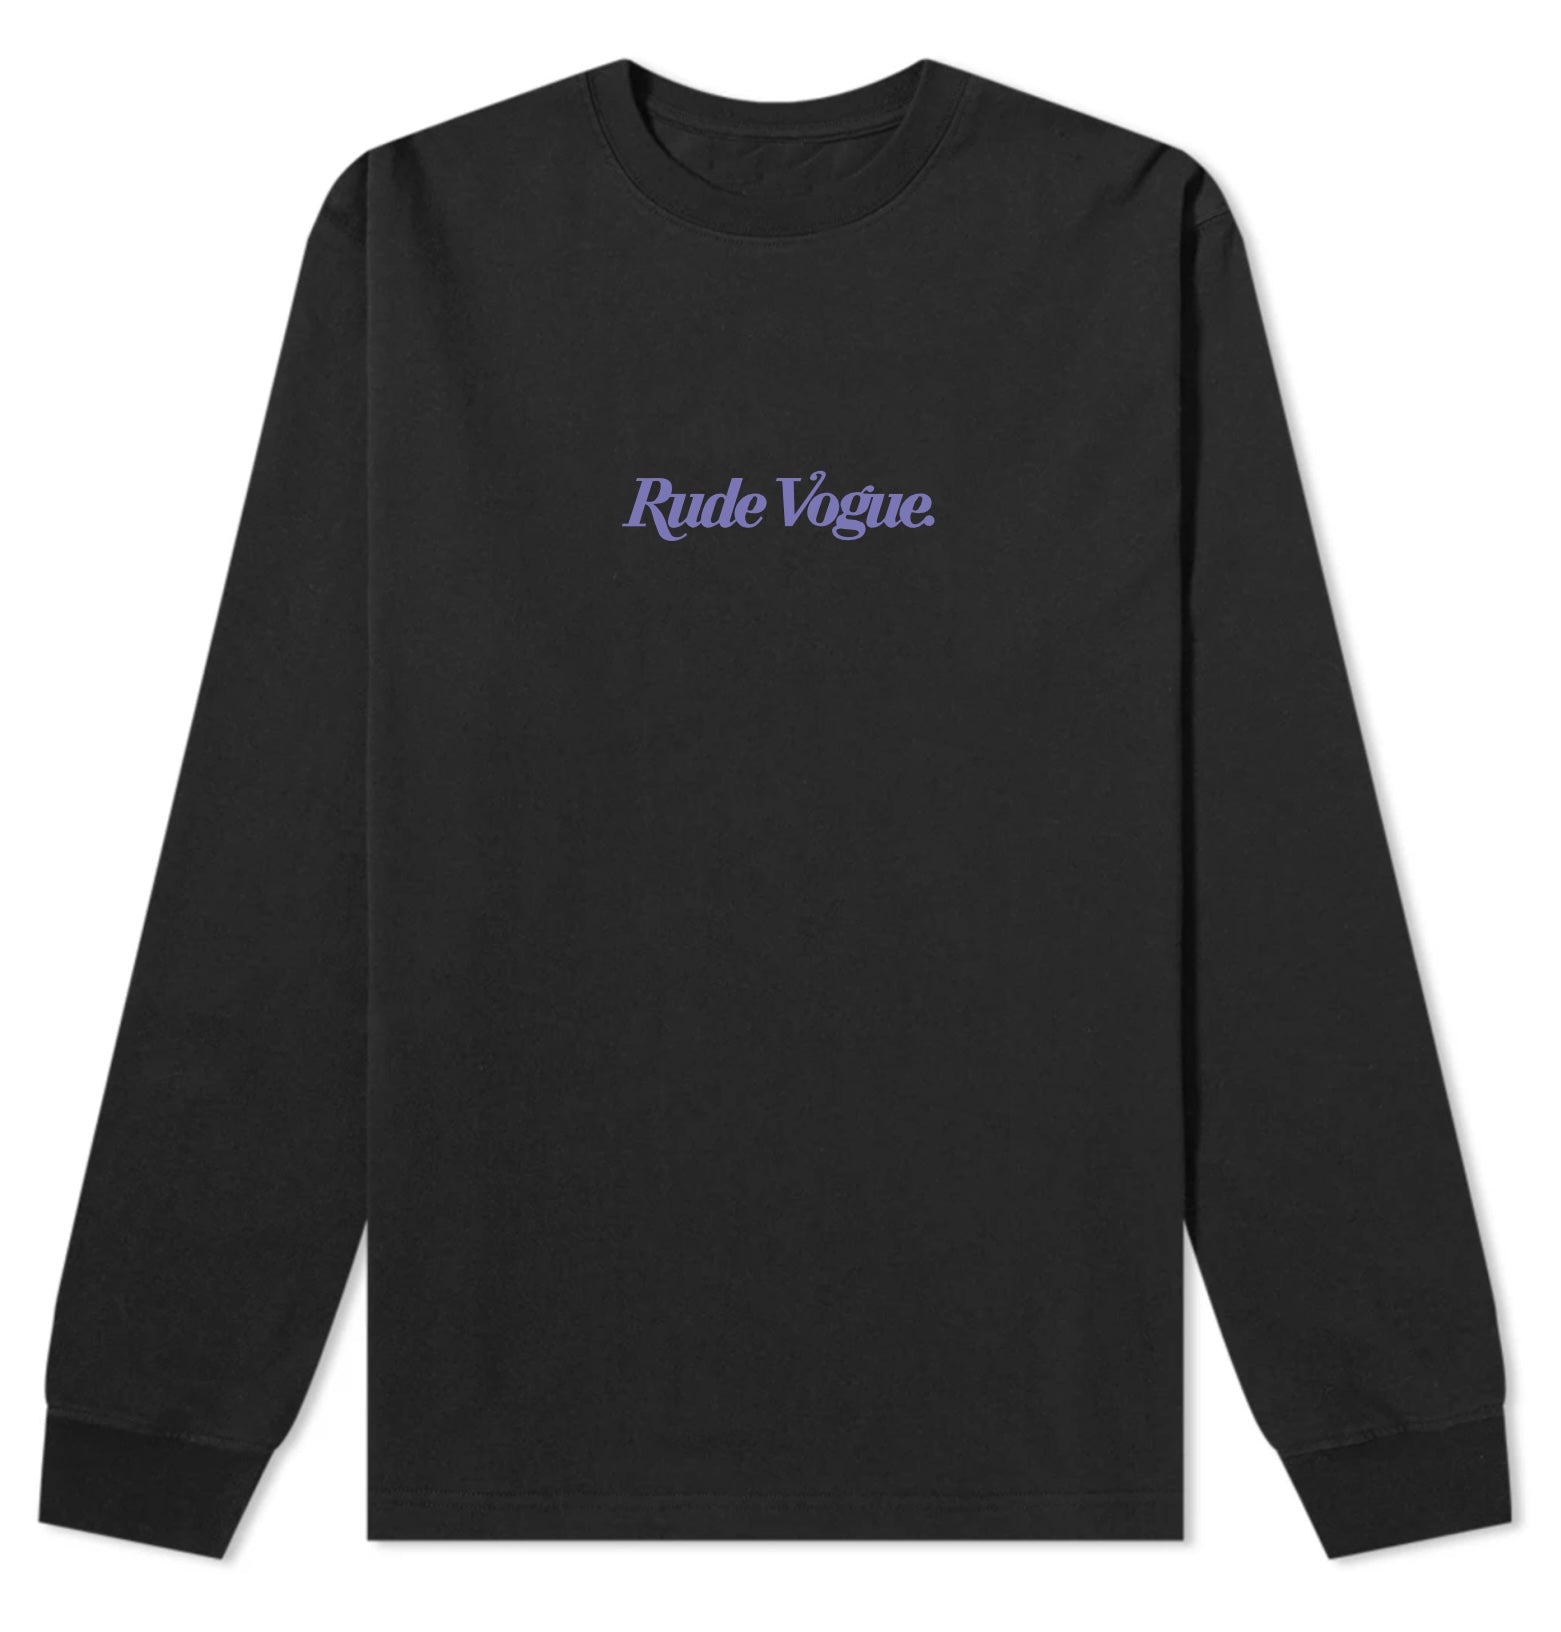 Rude Vogue Long Sleeve Shirt - Black/Laker Boy Purple Logo